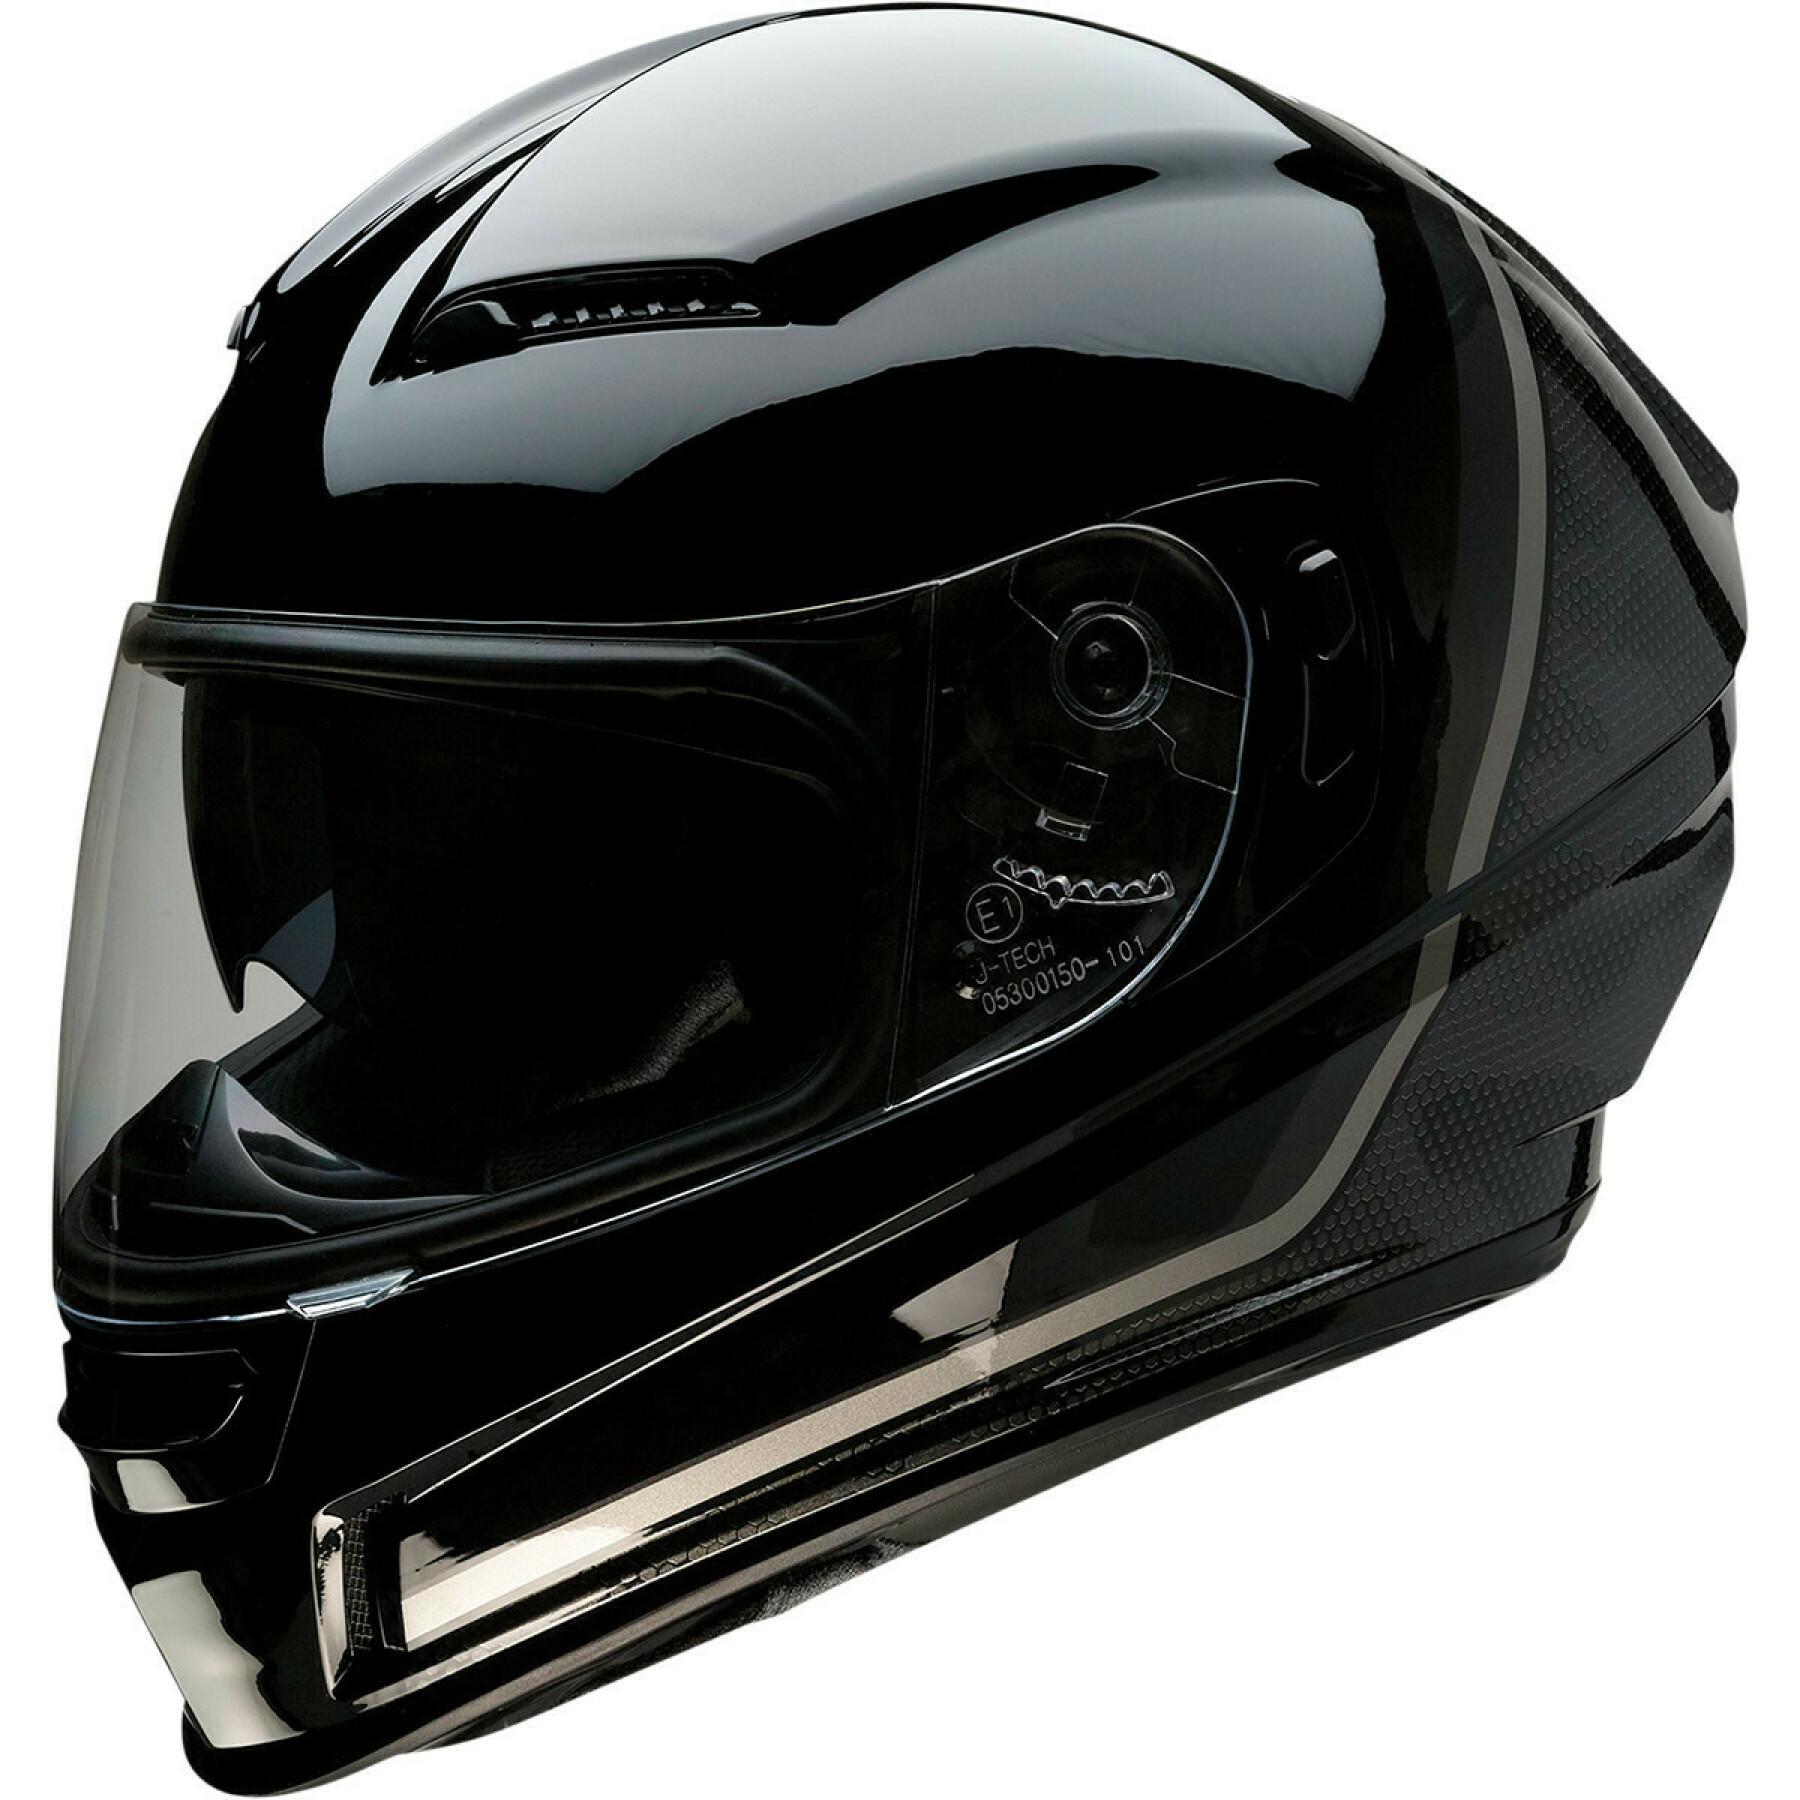 Full face motorcycle helmet Z1R jackal kuda